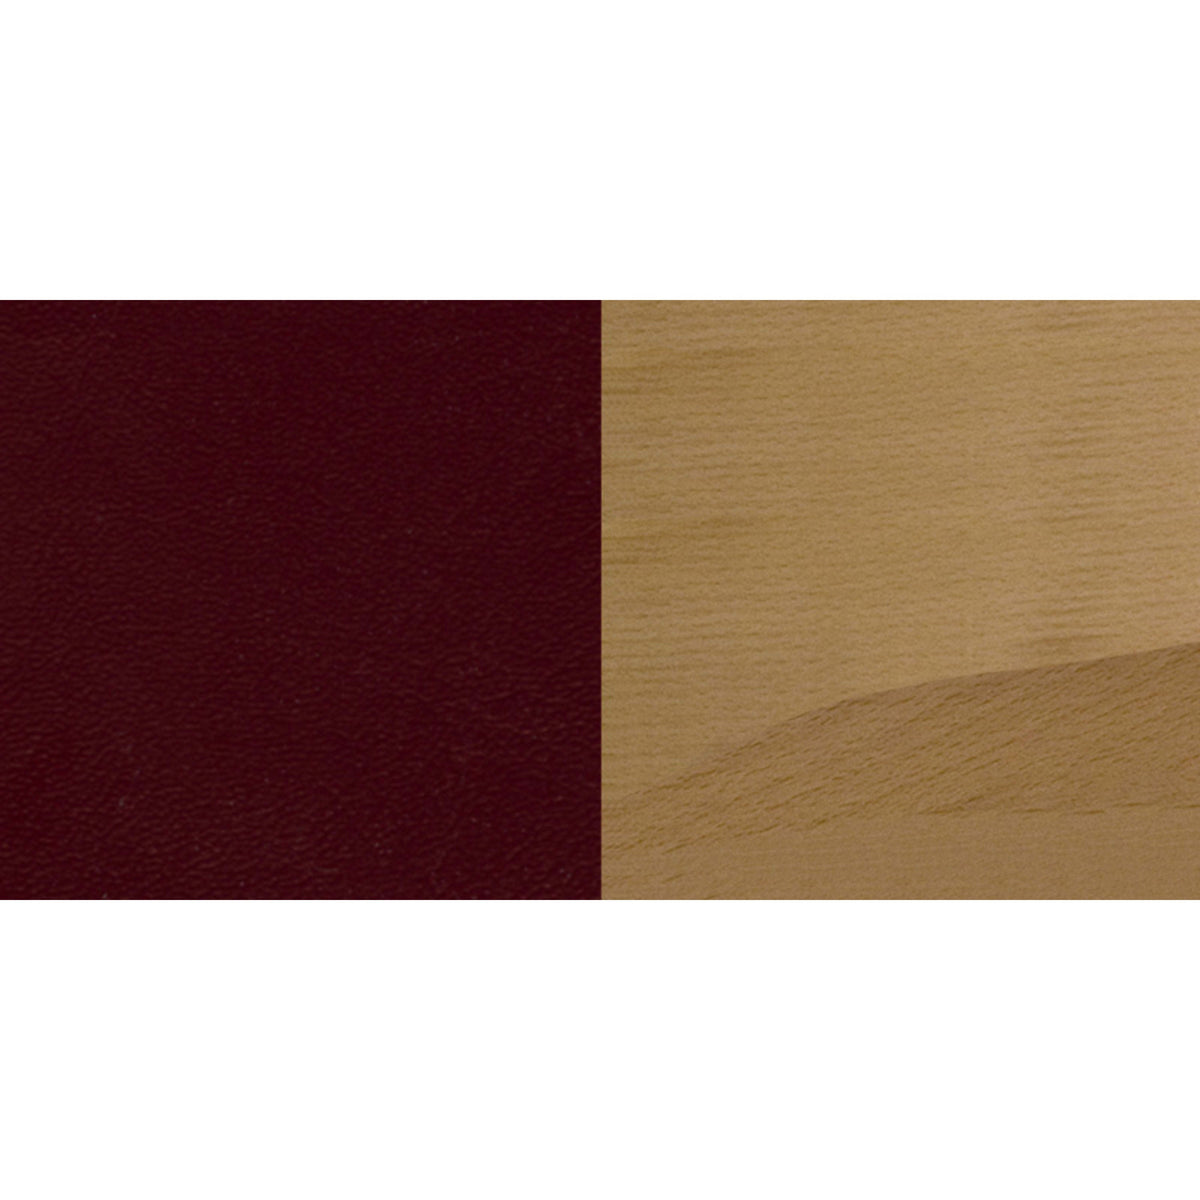 Burgundy Vinyl Seat/Natural Wood Frame |#| Ladder Back Natural Wood Restaurant Chair - Burgundy Vinyl Seat